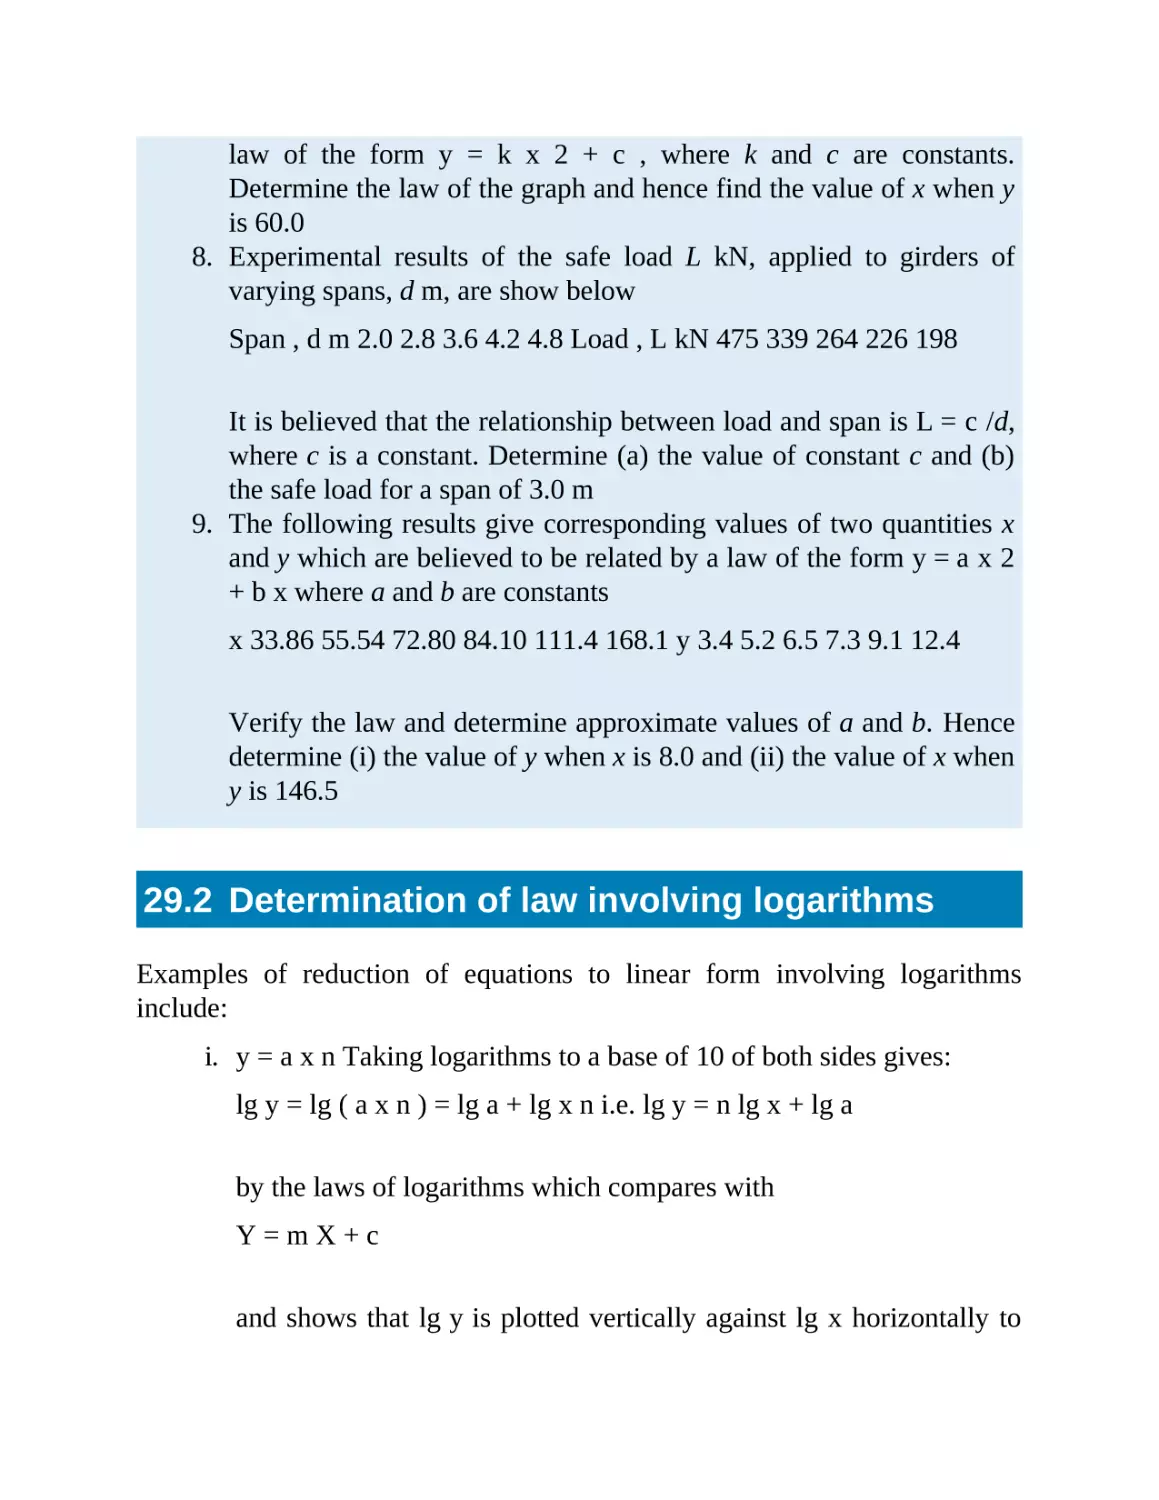 29.2 Determination of law involving logarithms